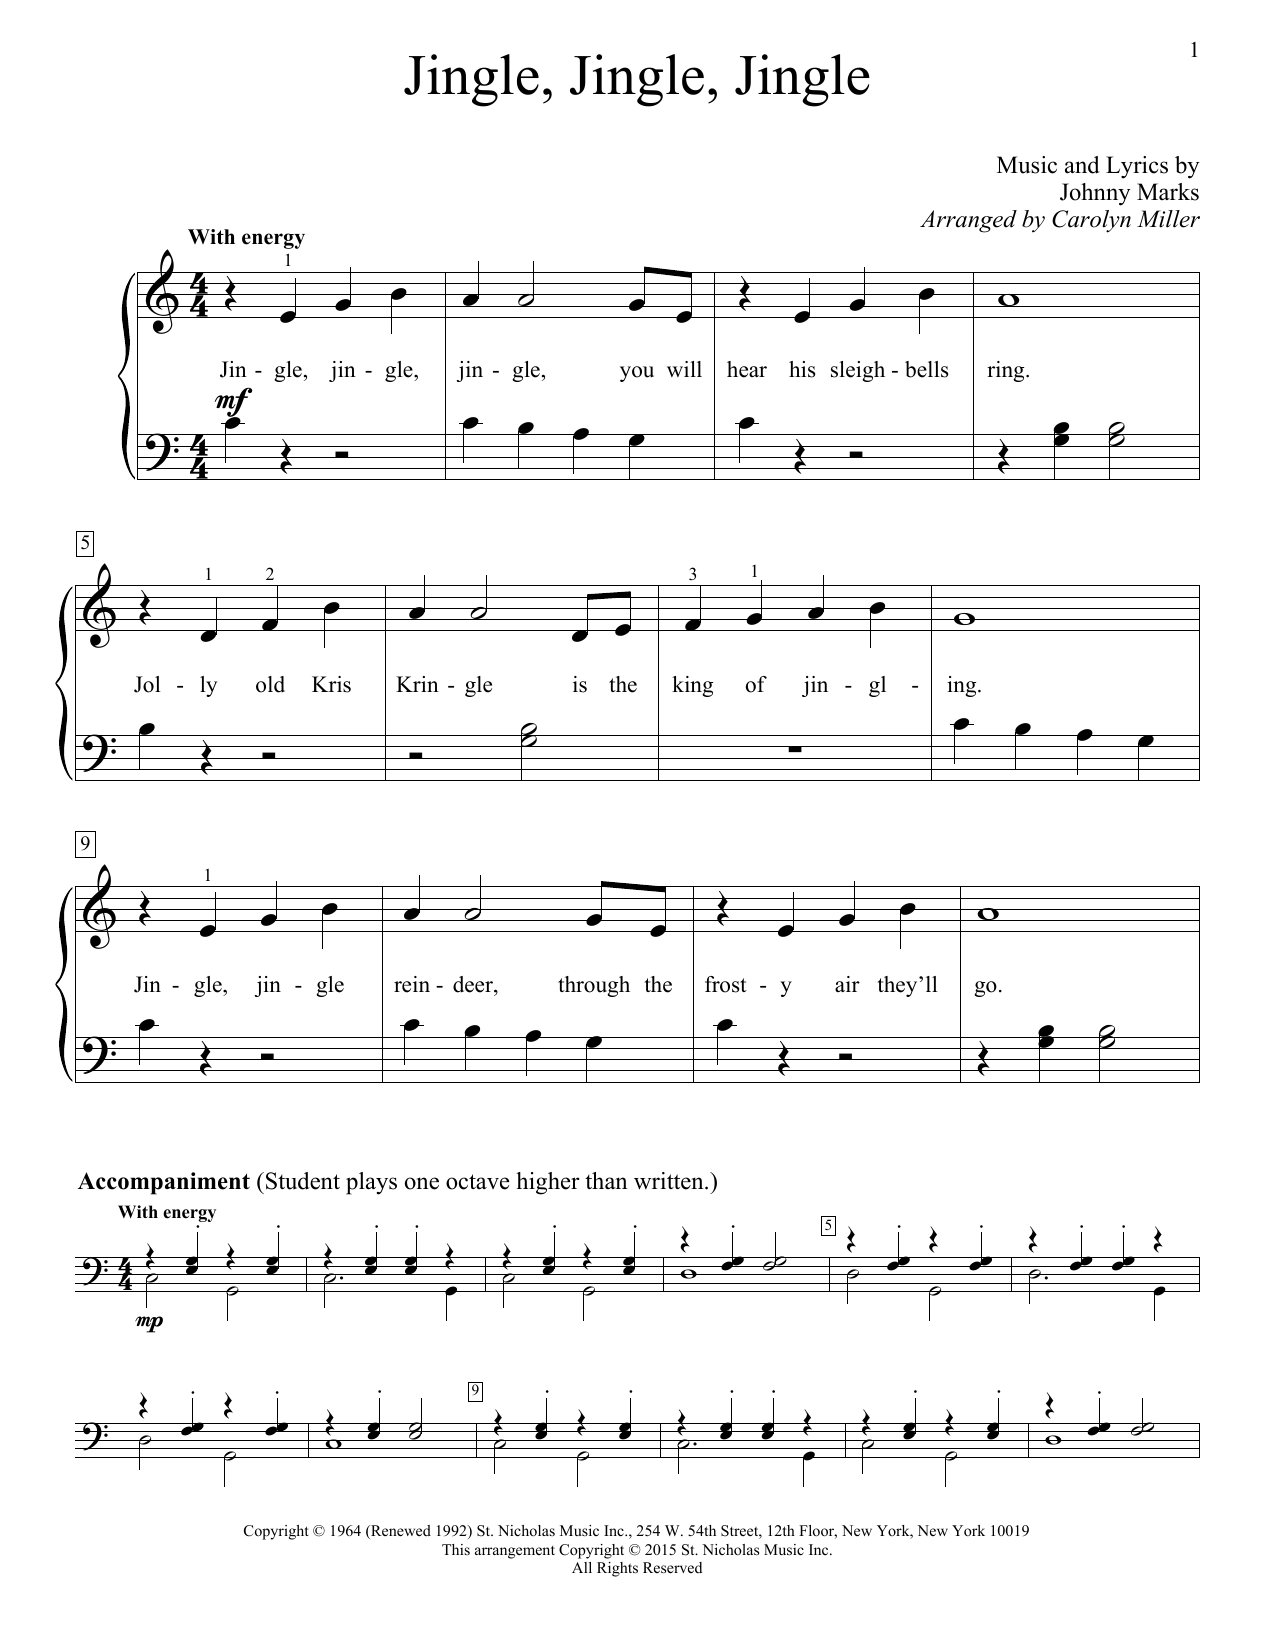 Download Carolyn Miller Jingle, Jingle, Jingle Sheet Music and learn how to play Educational Piano PDF digital score in minutes